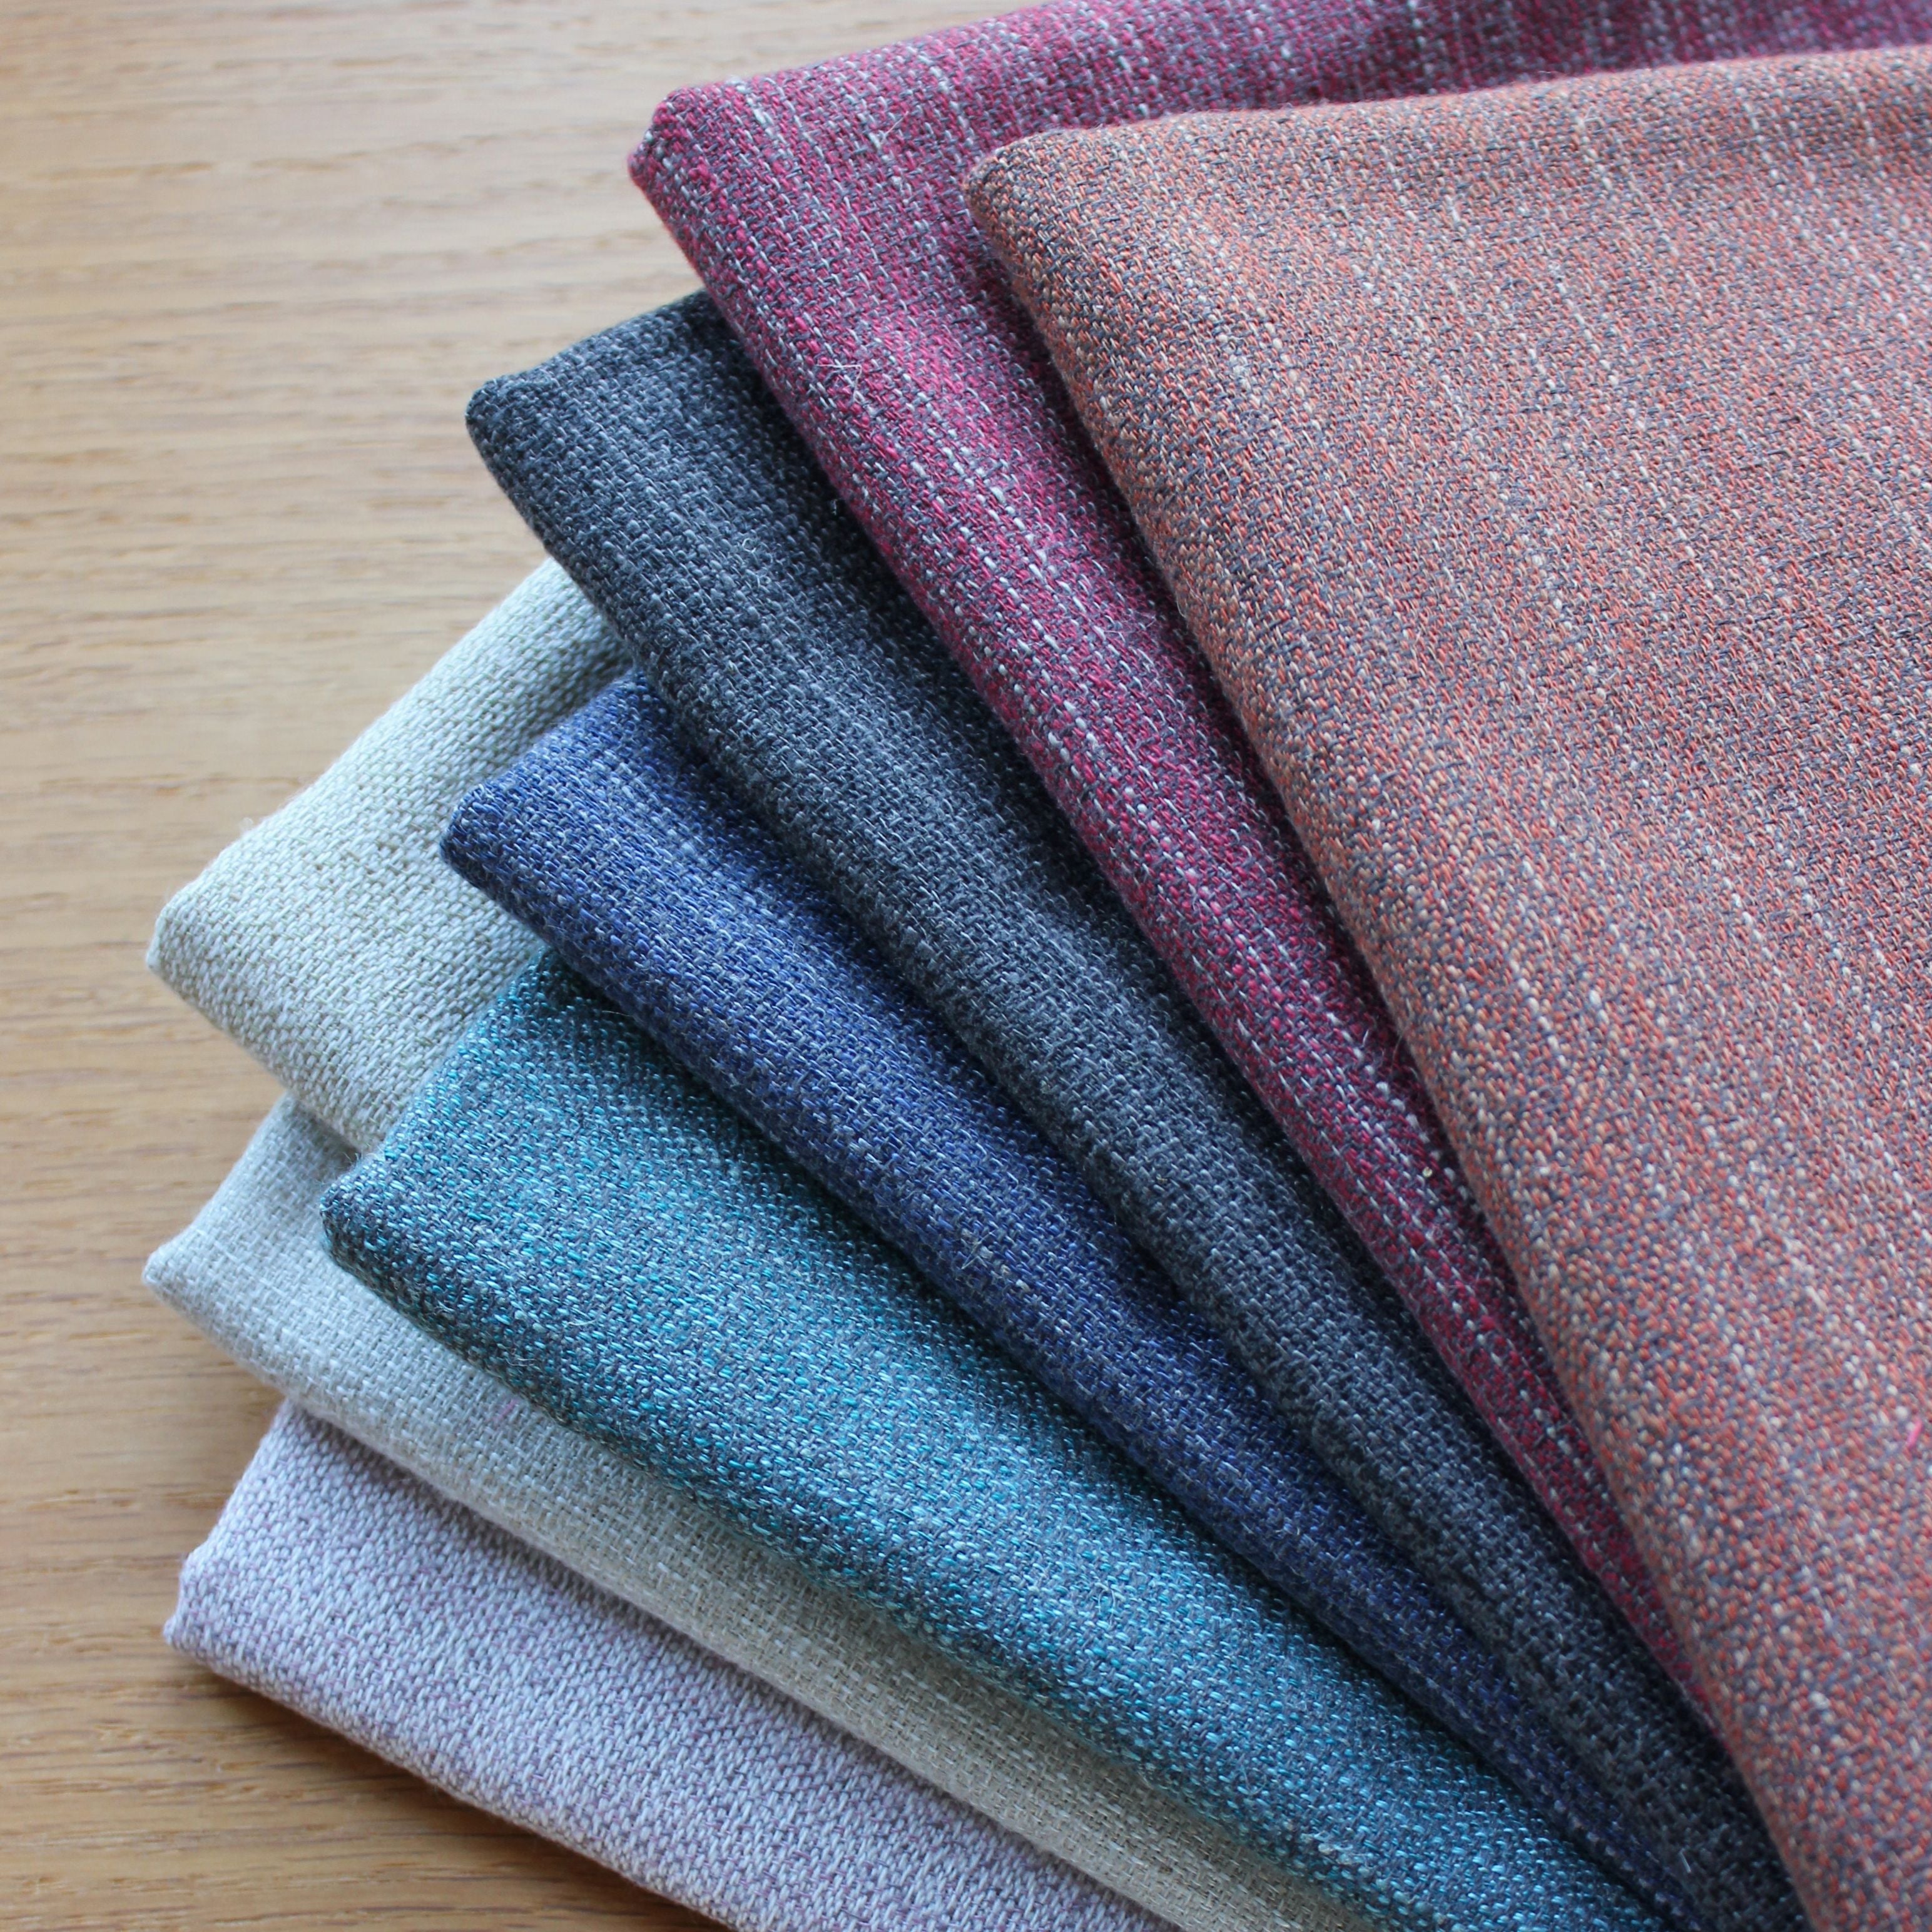 Linen Texture Charcoal Fabric – Blyth & Bonnie